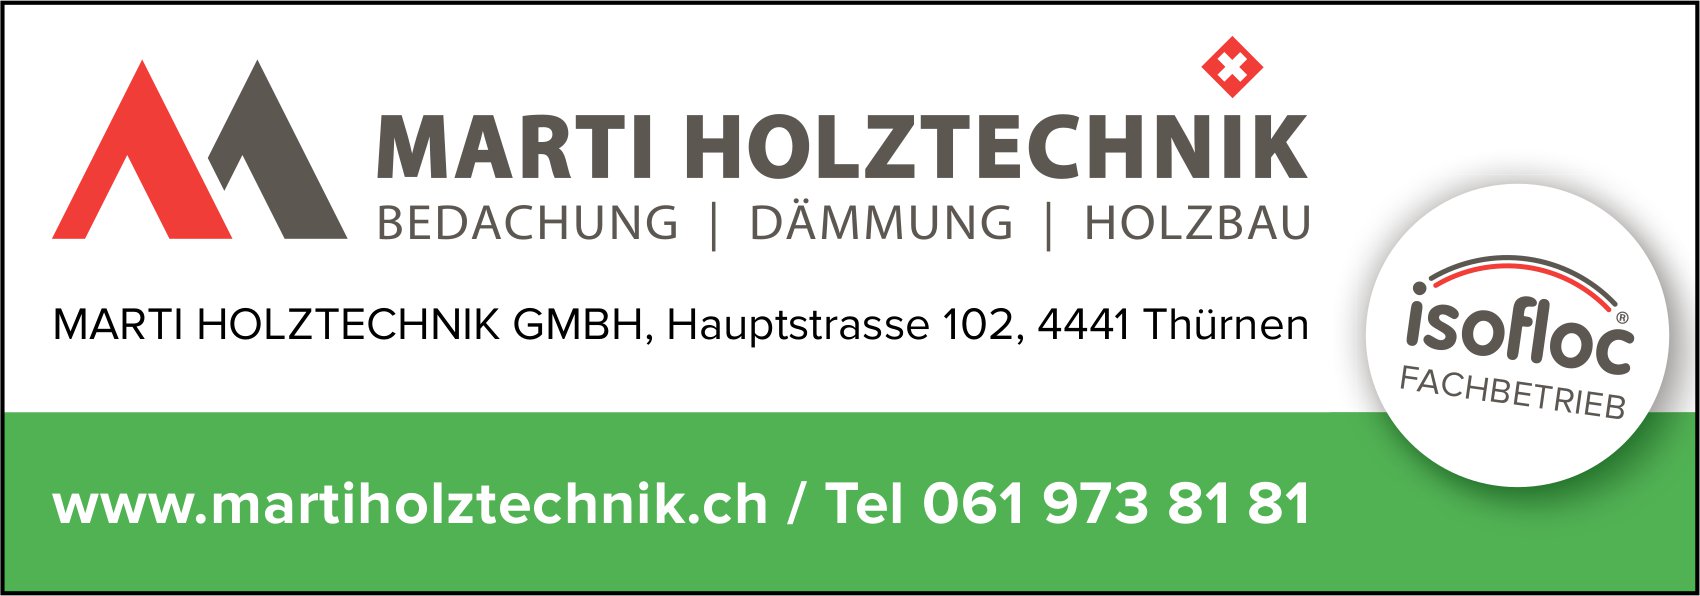 Marti Holztechnik GmbH, Thürnen - Bedachung, Dämmung,  Holzbau